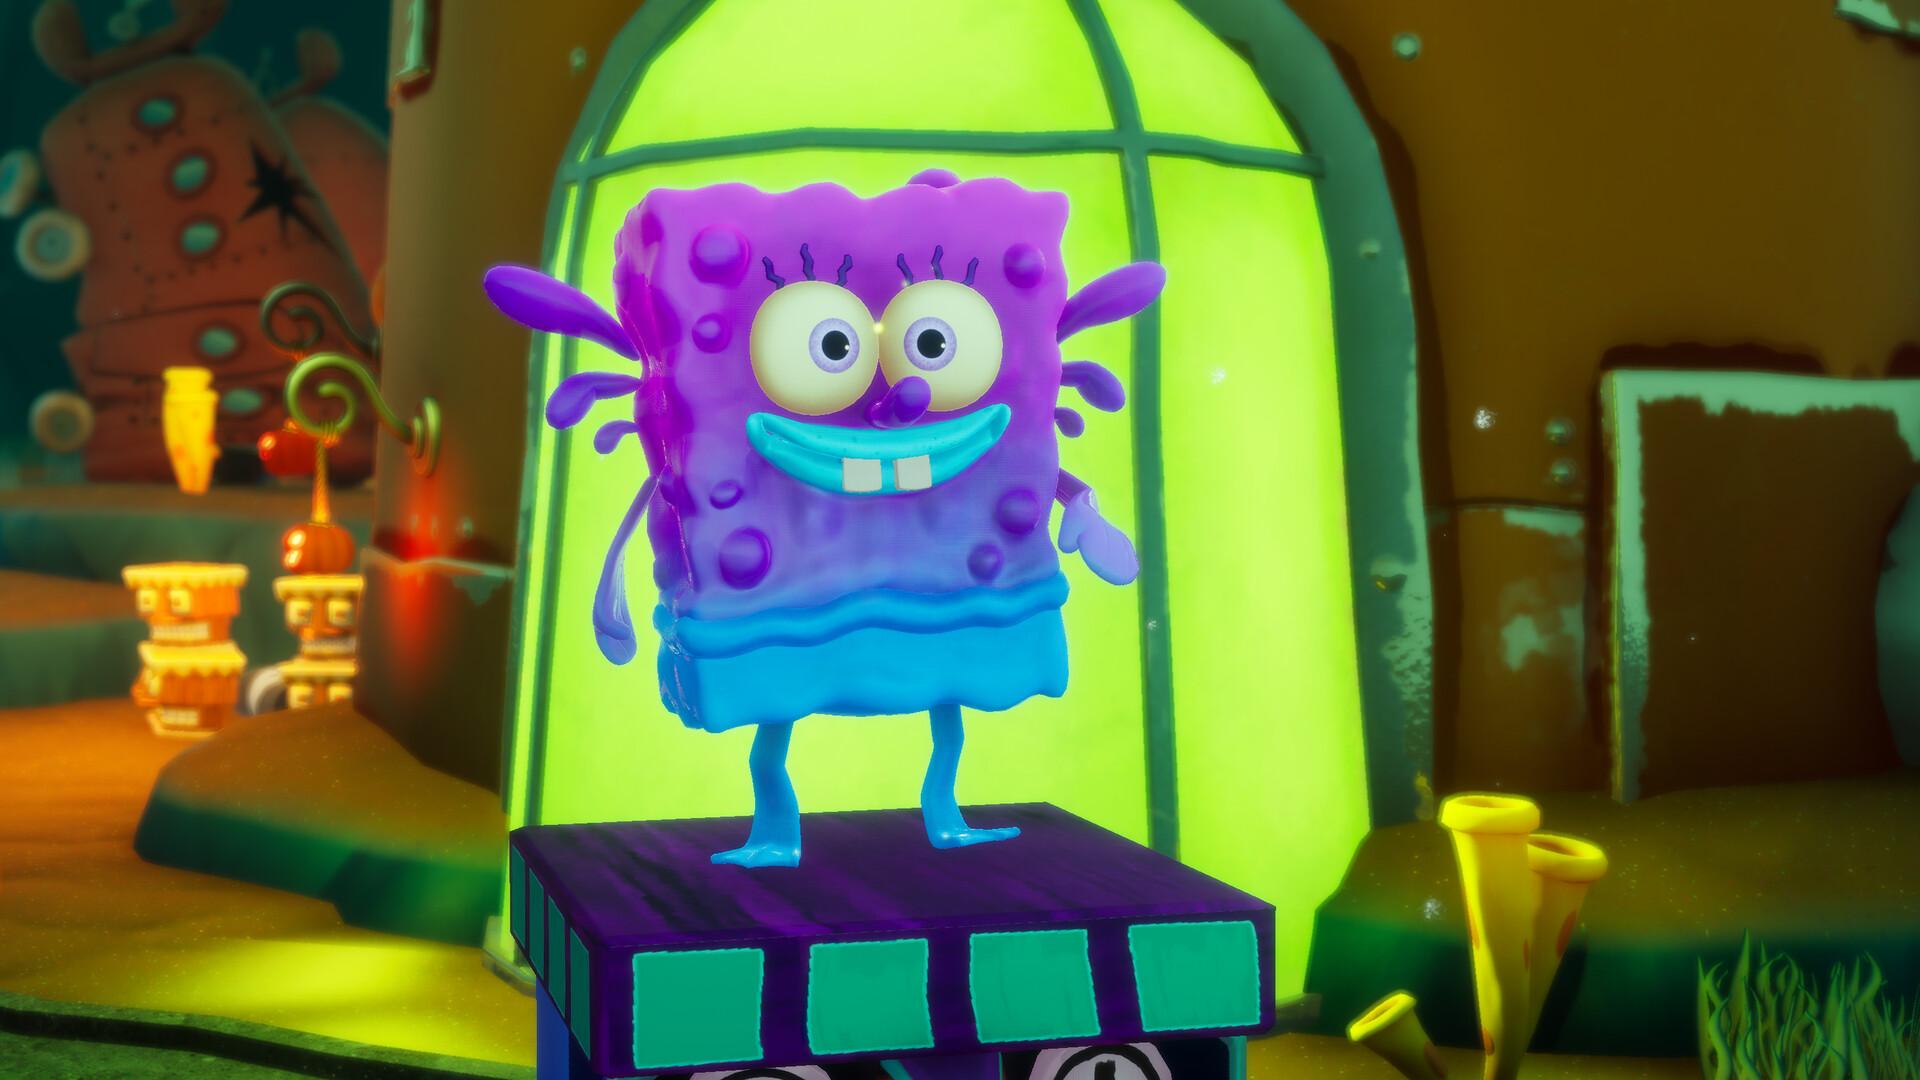 SpongeBob SquarePants: The Cosmic Shake - Costume Pack